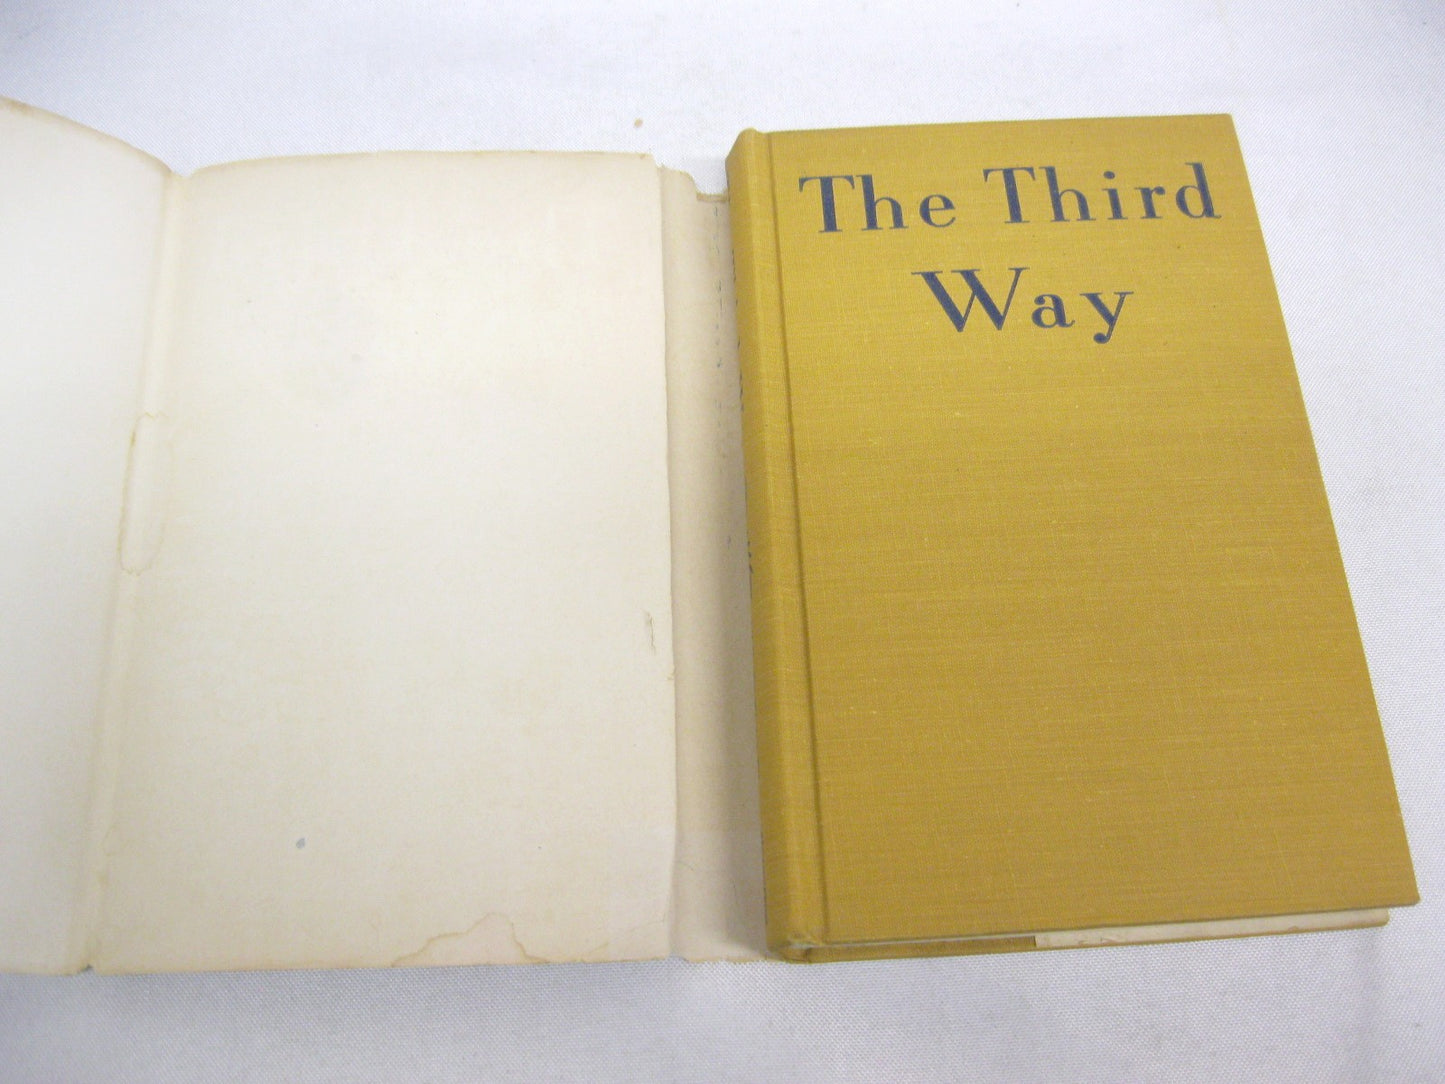 The Third Way by Stuart Cloete